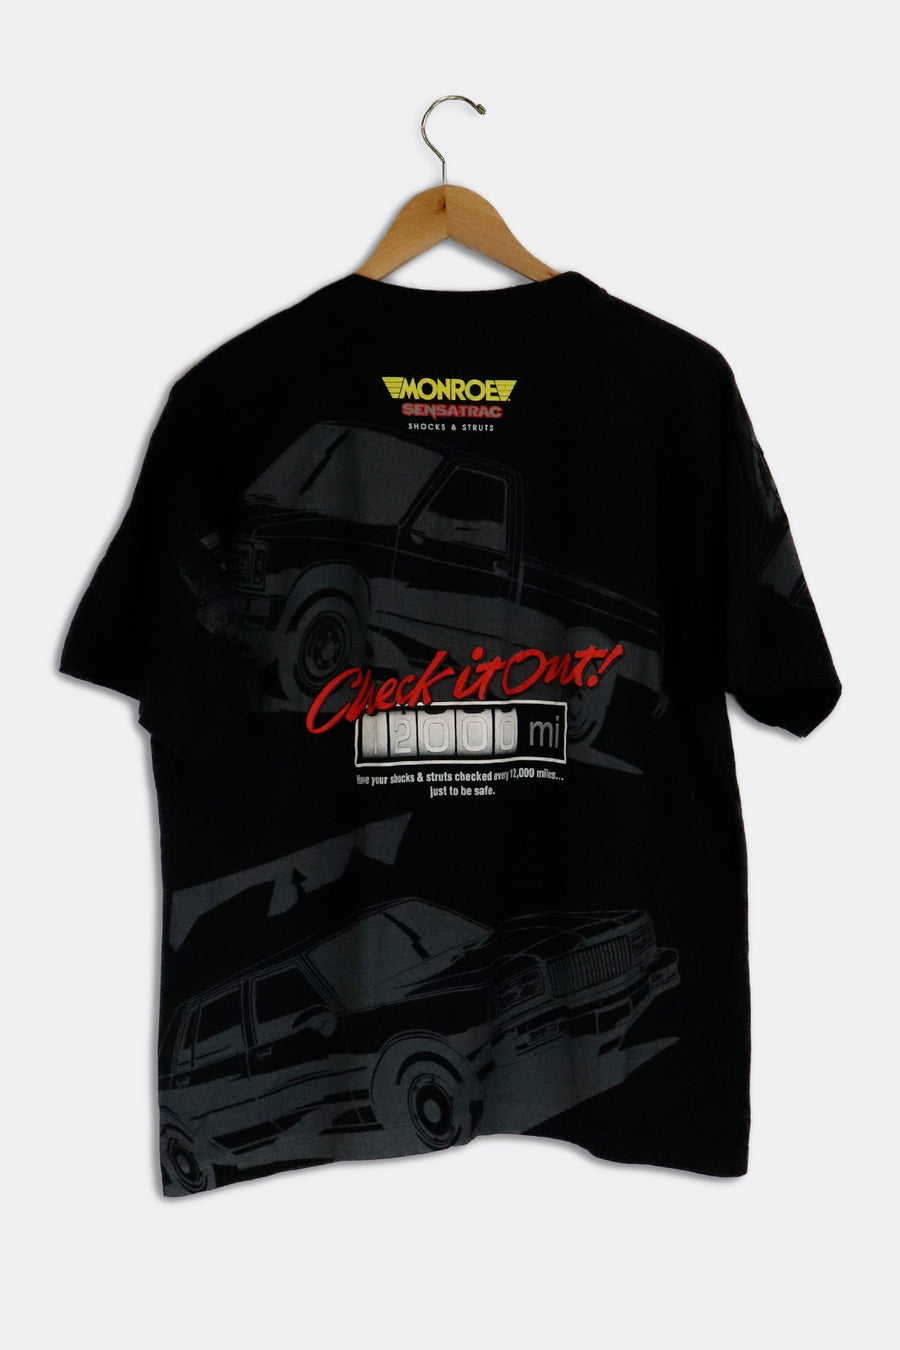 Vintage Monroe Racing Check It Out T Shirt Sz L